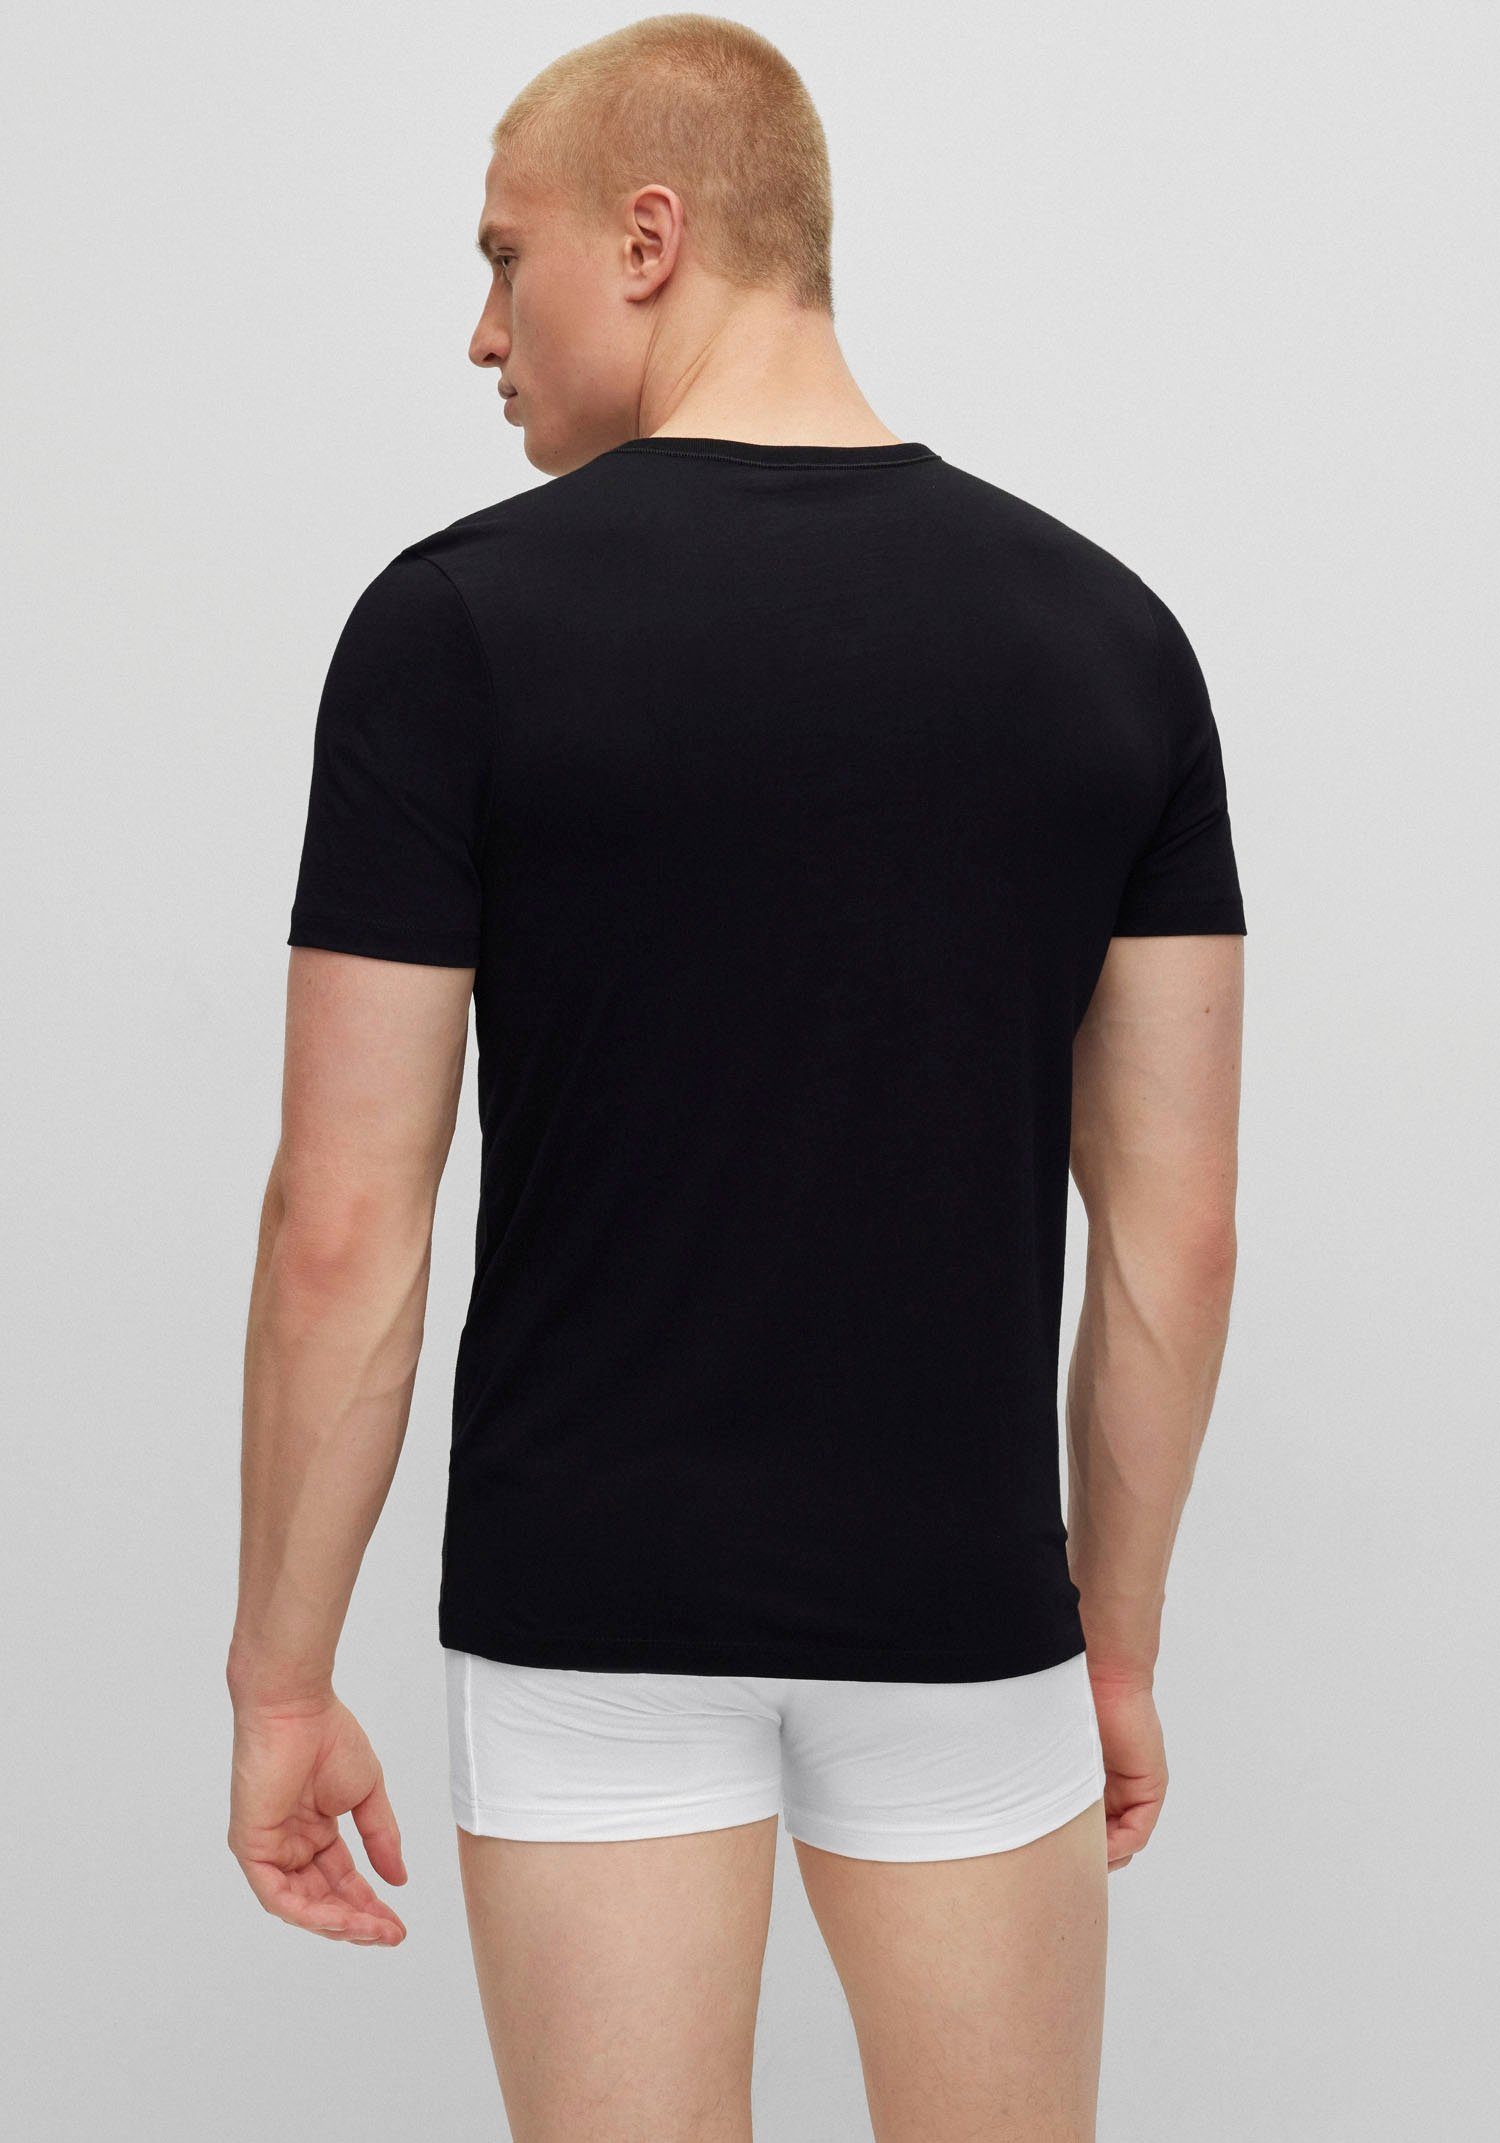 BOSS V-Shirt T-Shirt VN CO 3P black (Packung)